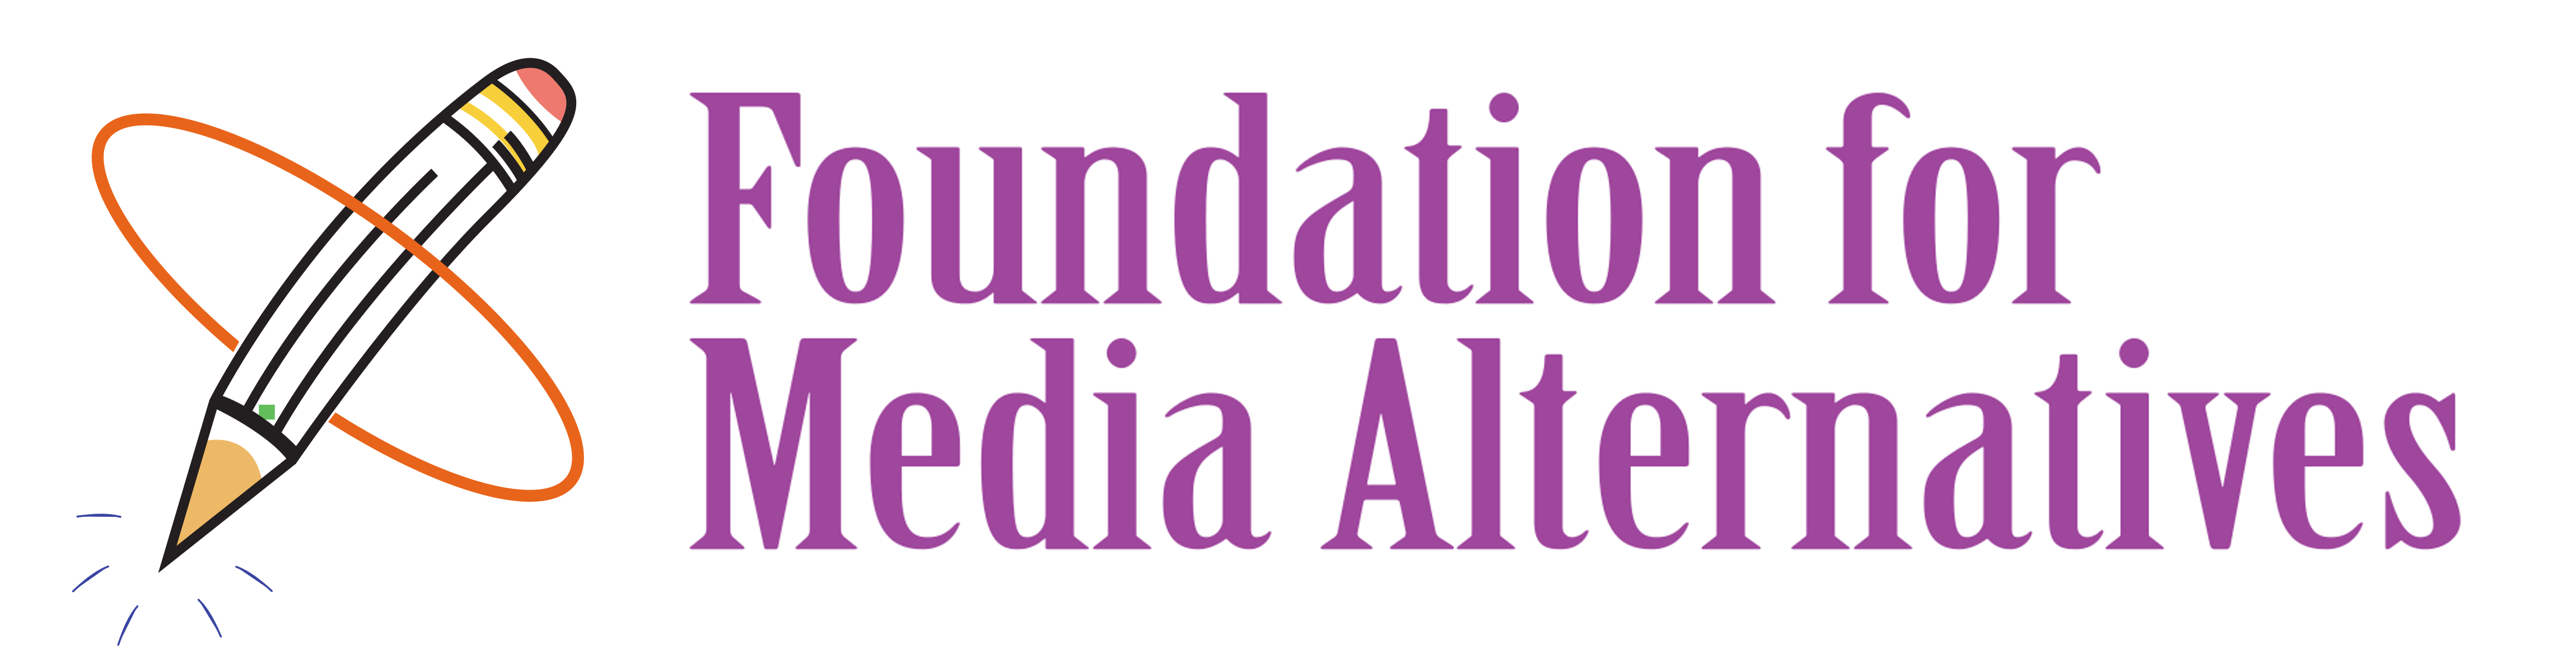 FMA Logo - FMA logo on alpha large rect over (3). Foundation for Media